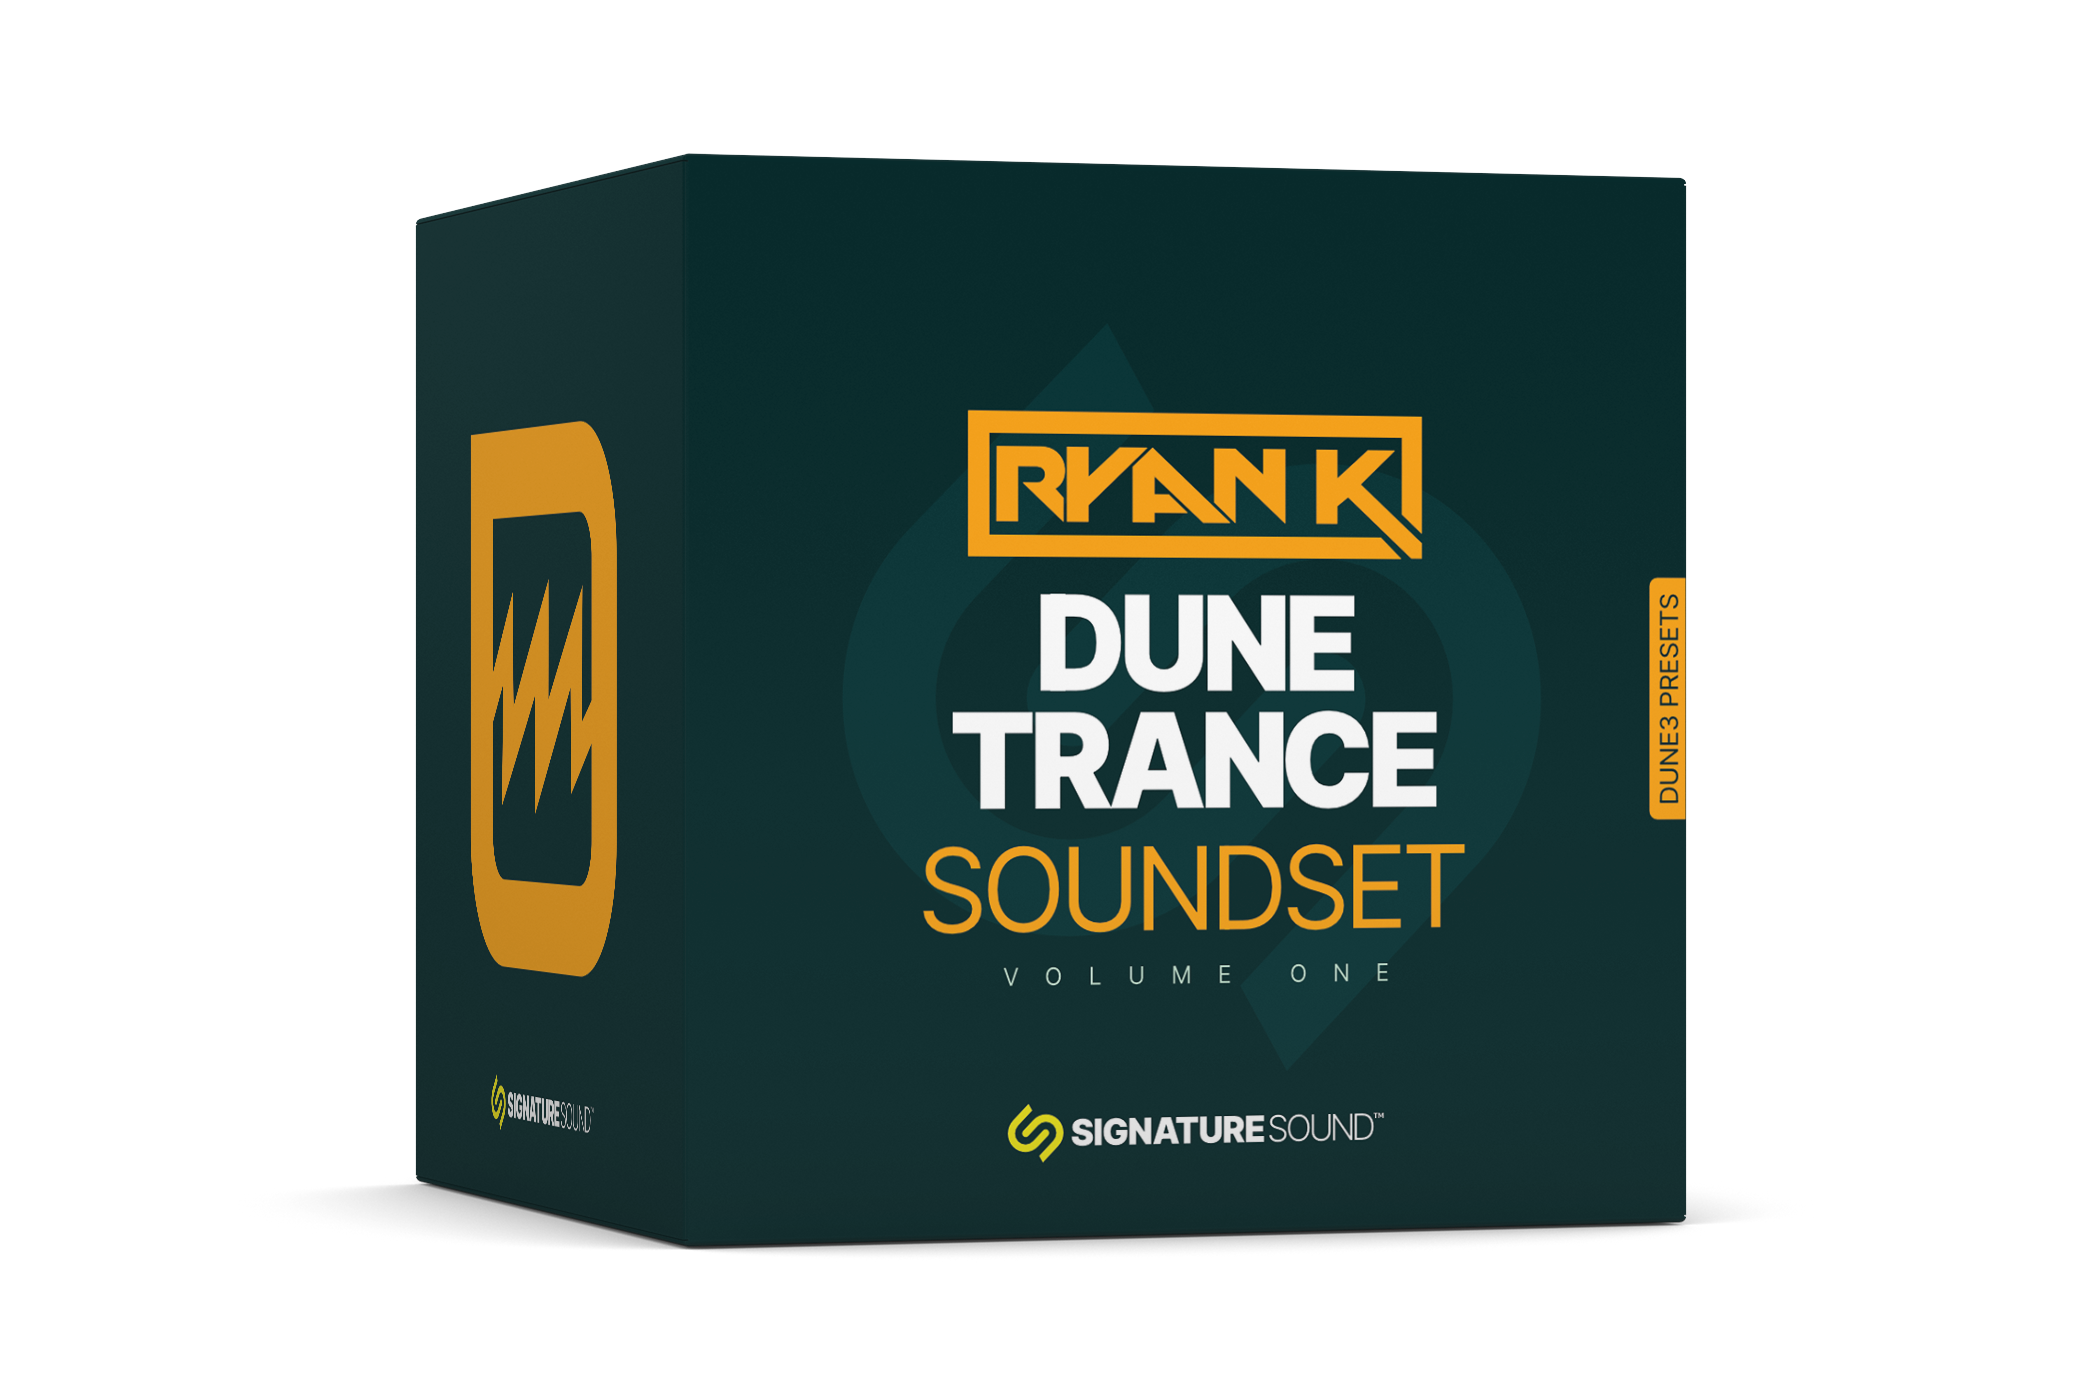 Ryan K Dune Trance [Soundset] Volume One